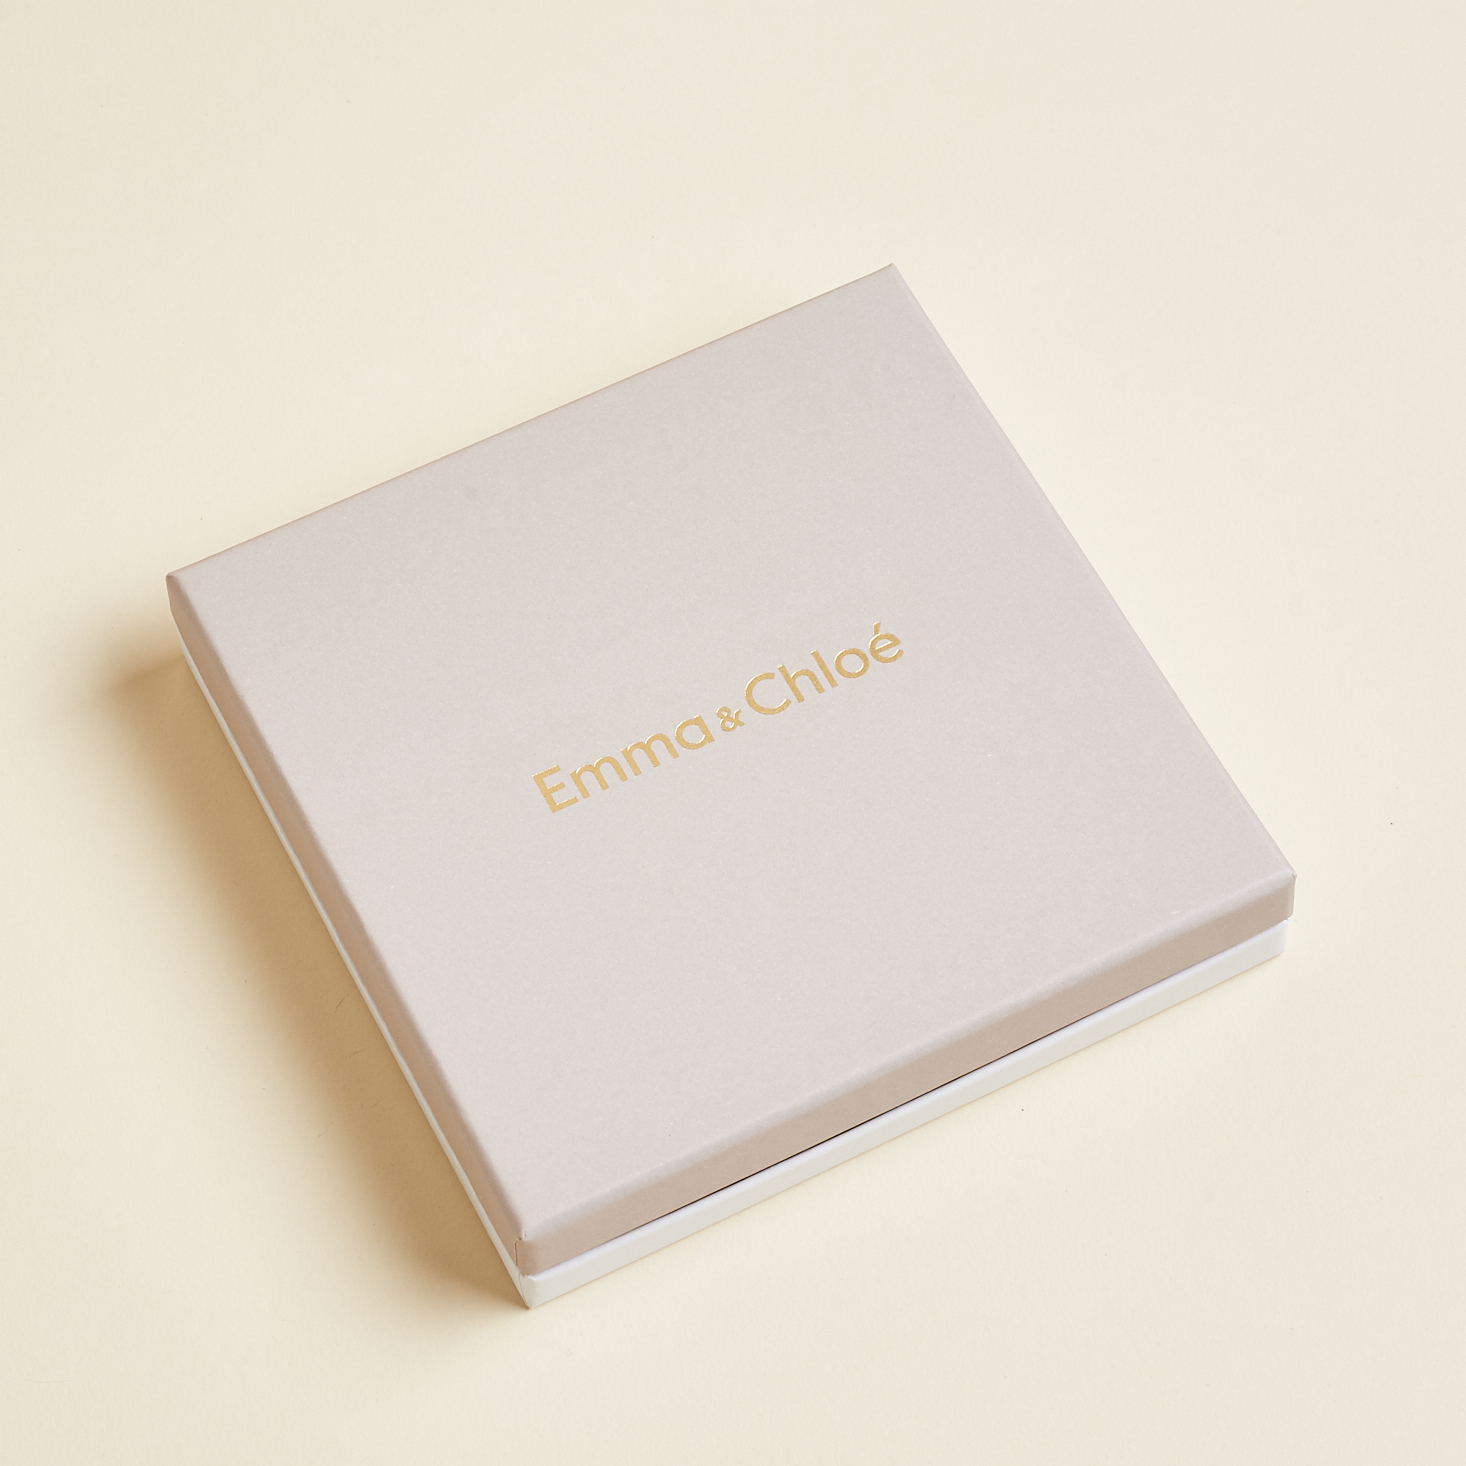 Emma & Chloé Jewelry Box Review – September 2019